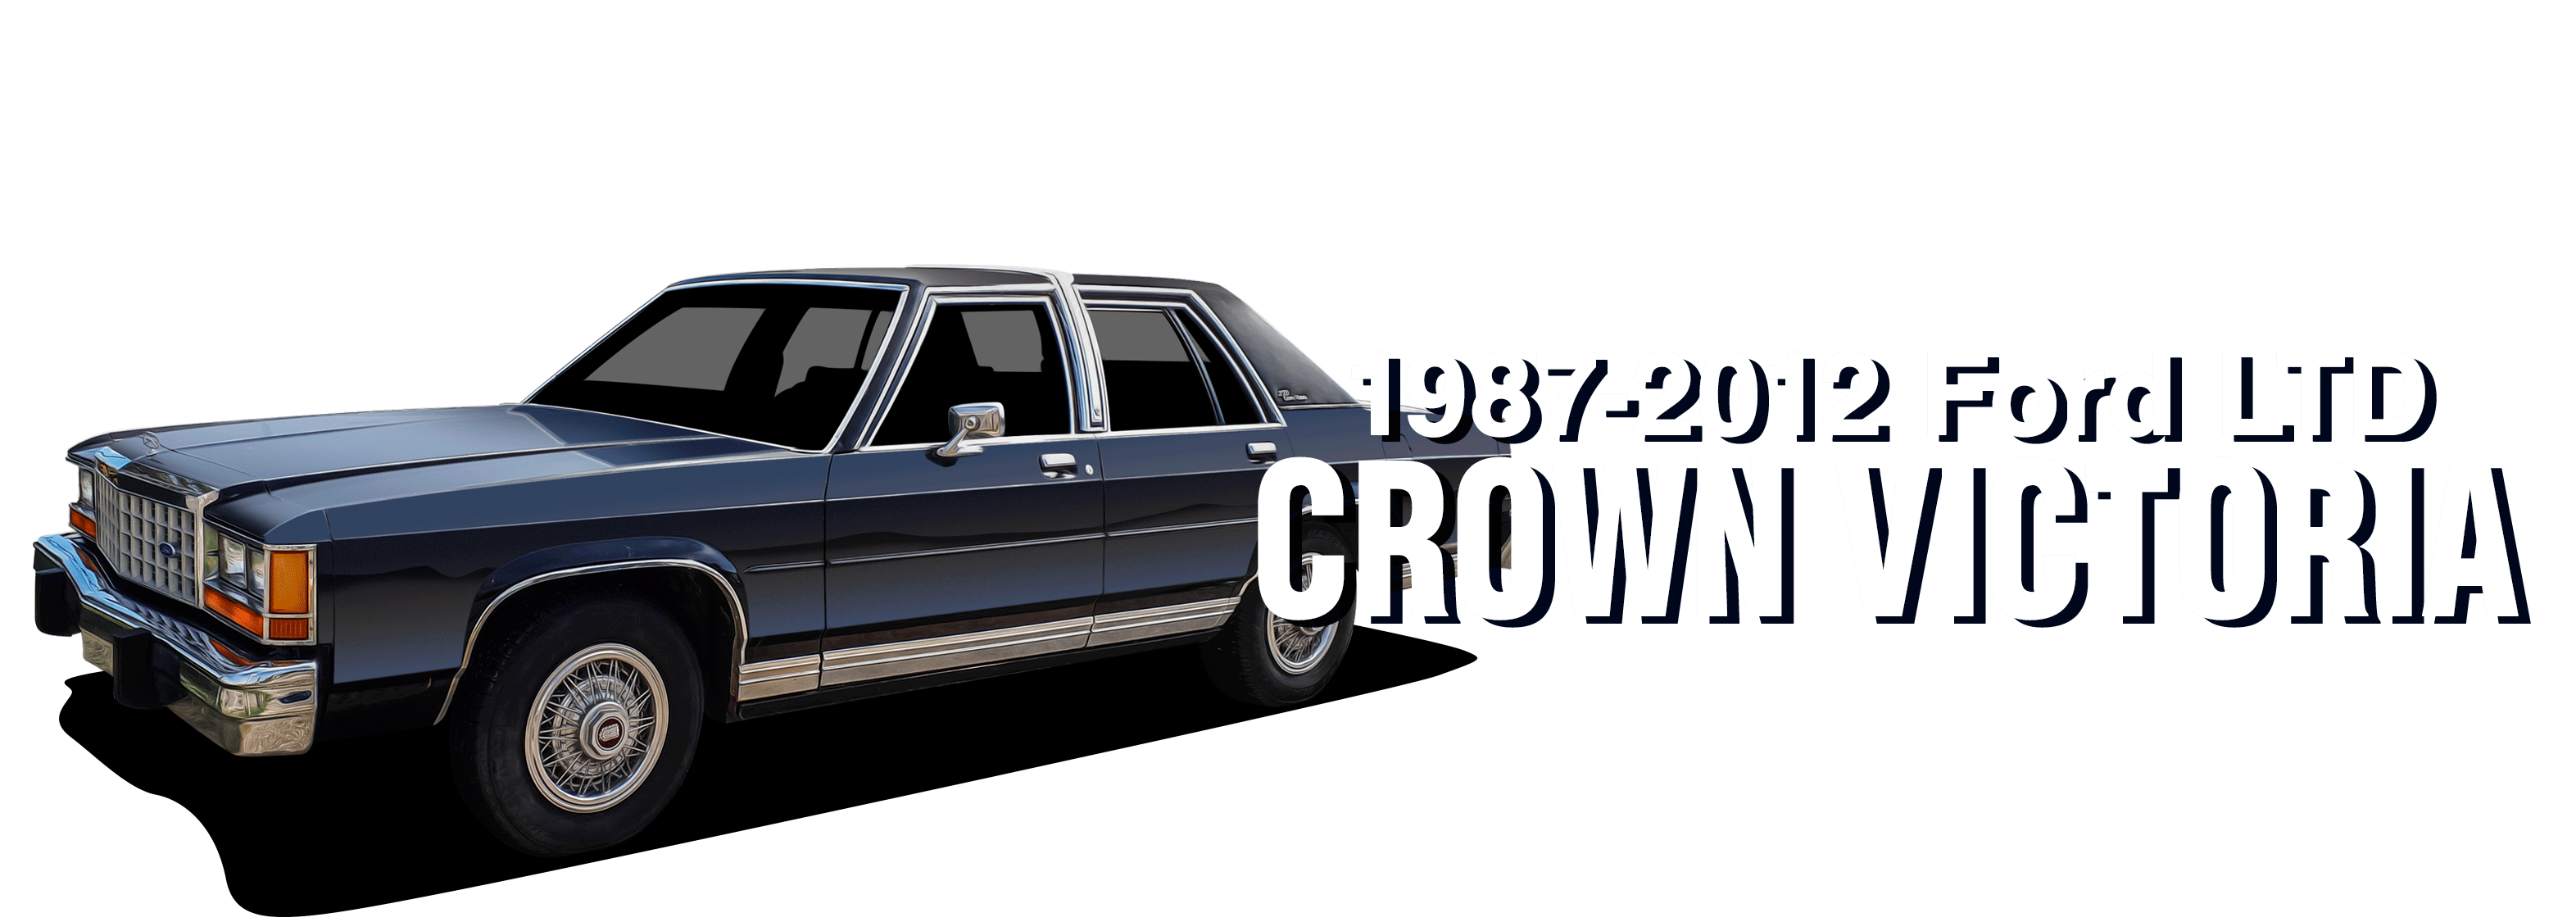 Ford-CrownVictoria-vehicle-desktop-2023